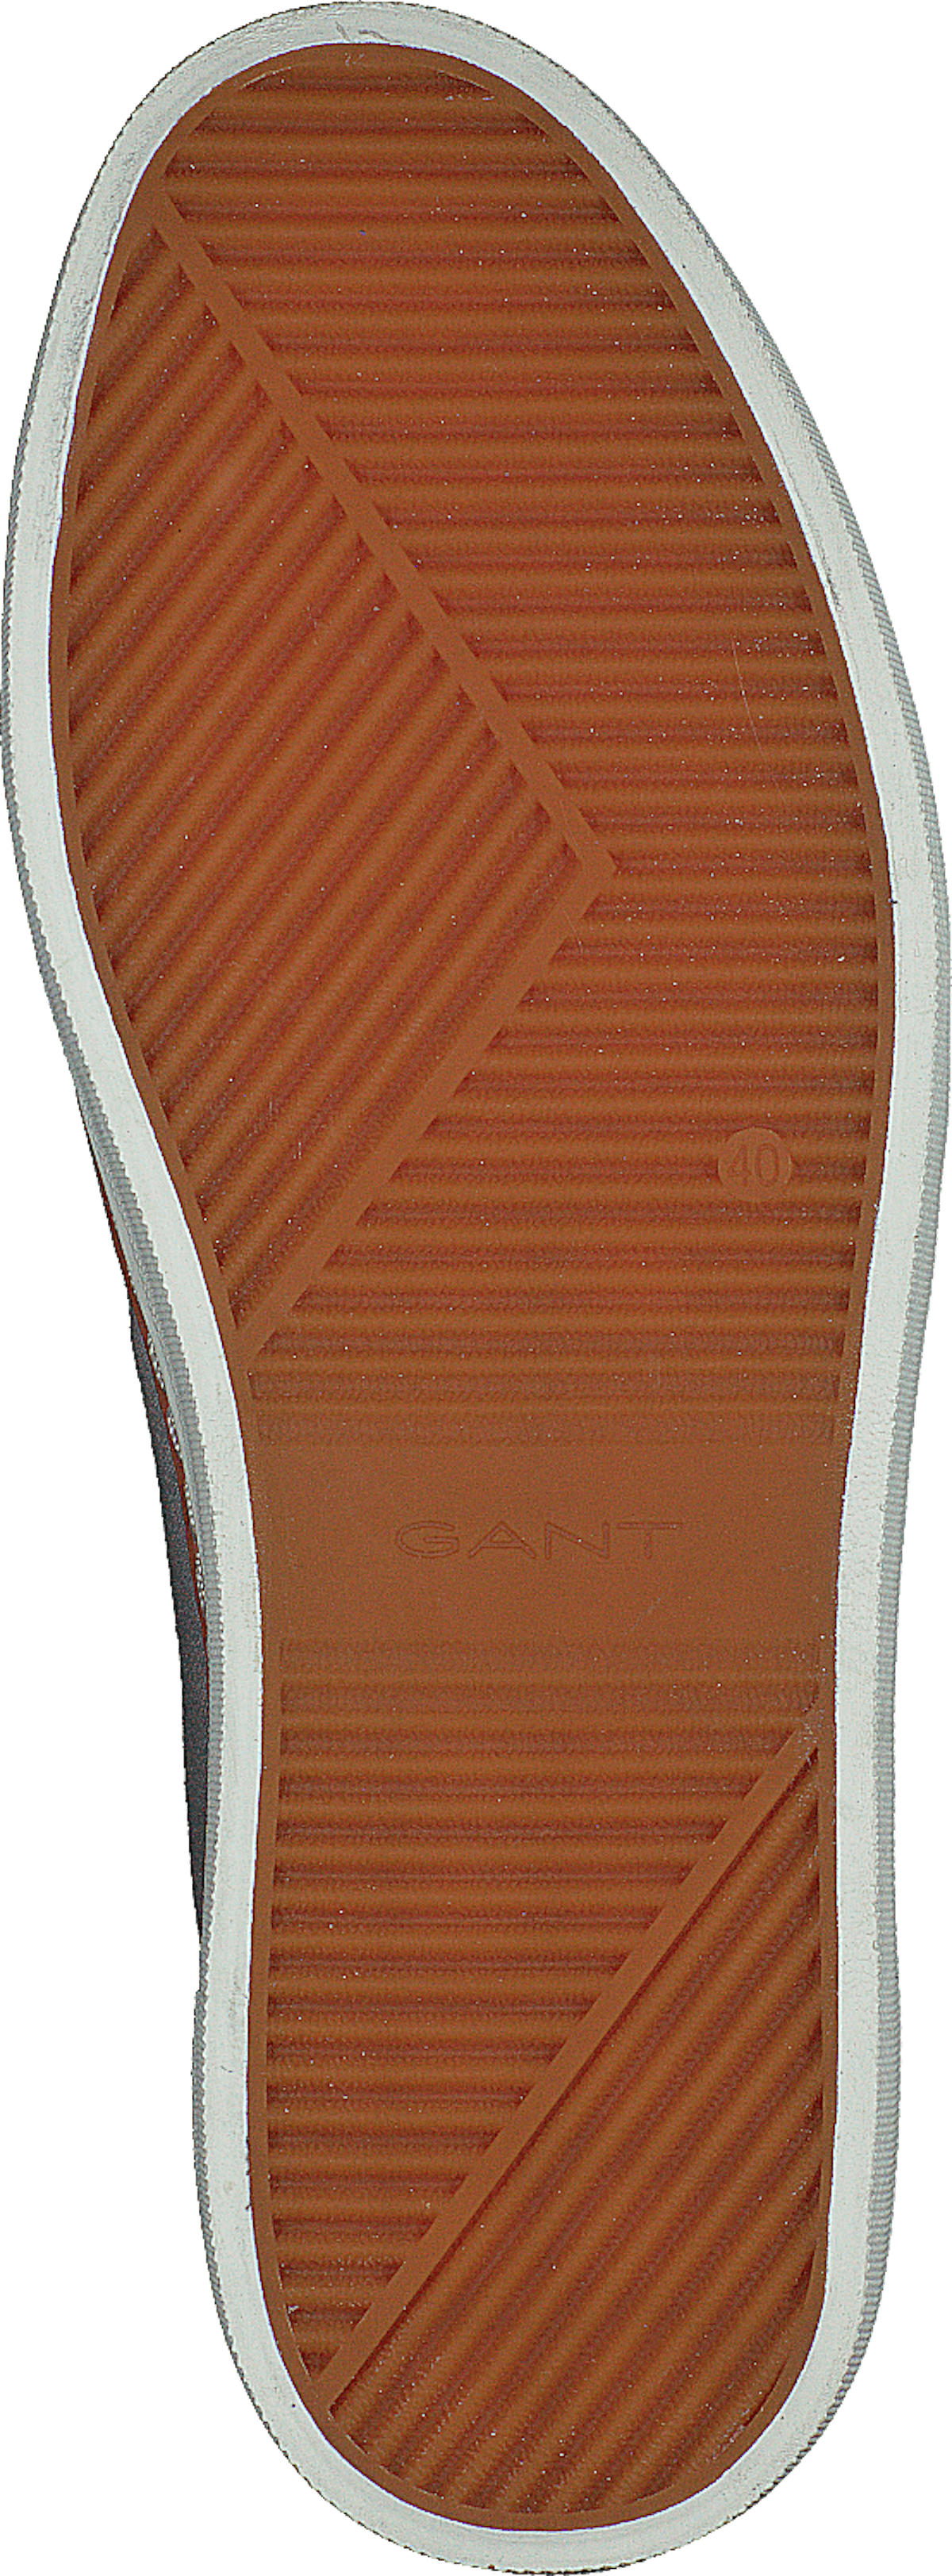 Prepville Sneaker G841 - Sleet Gray